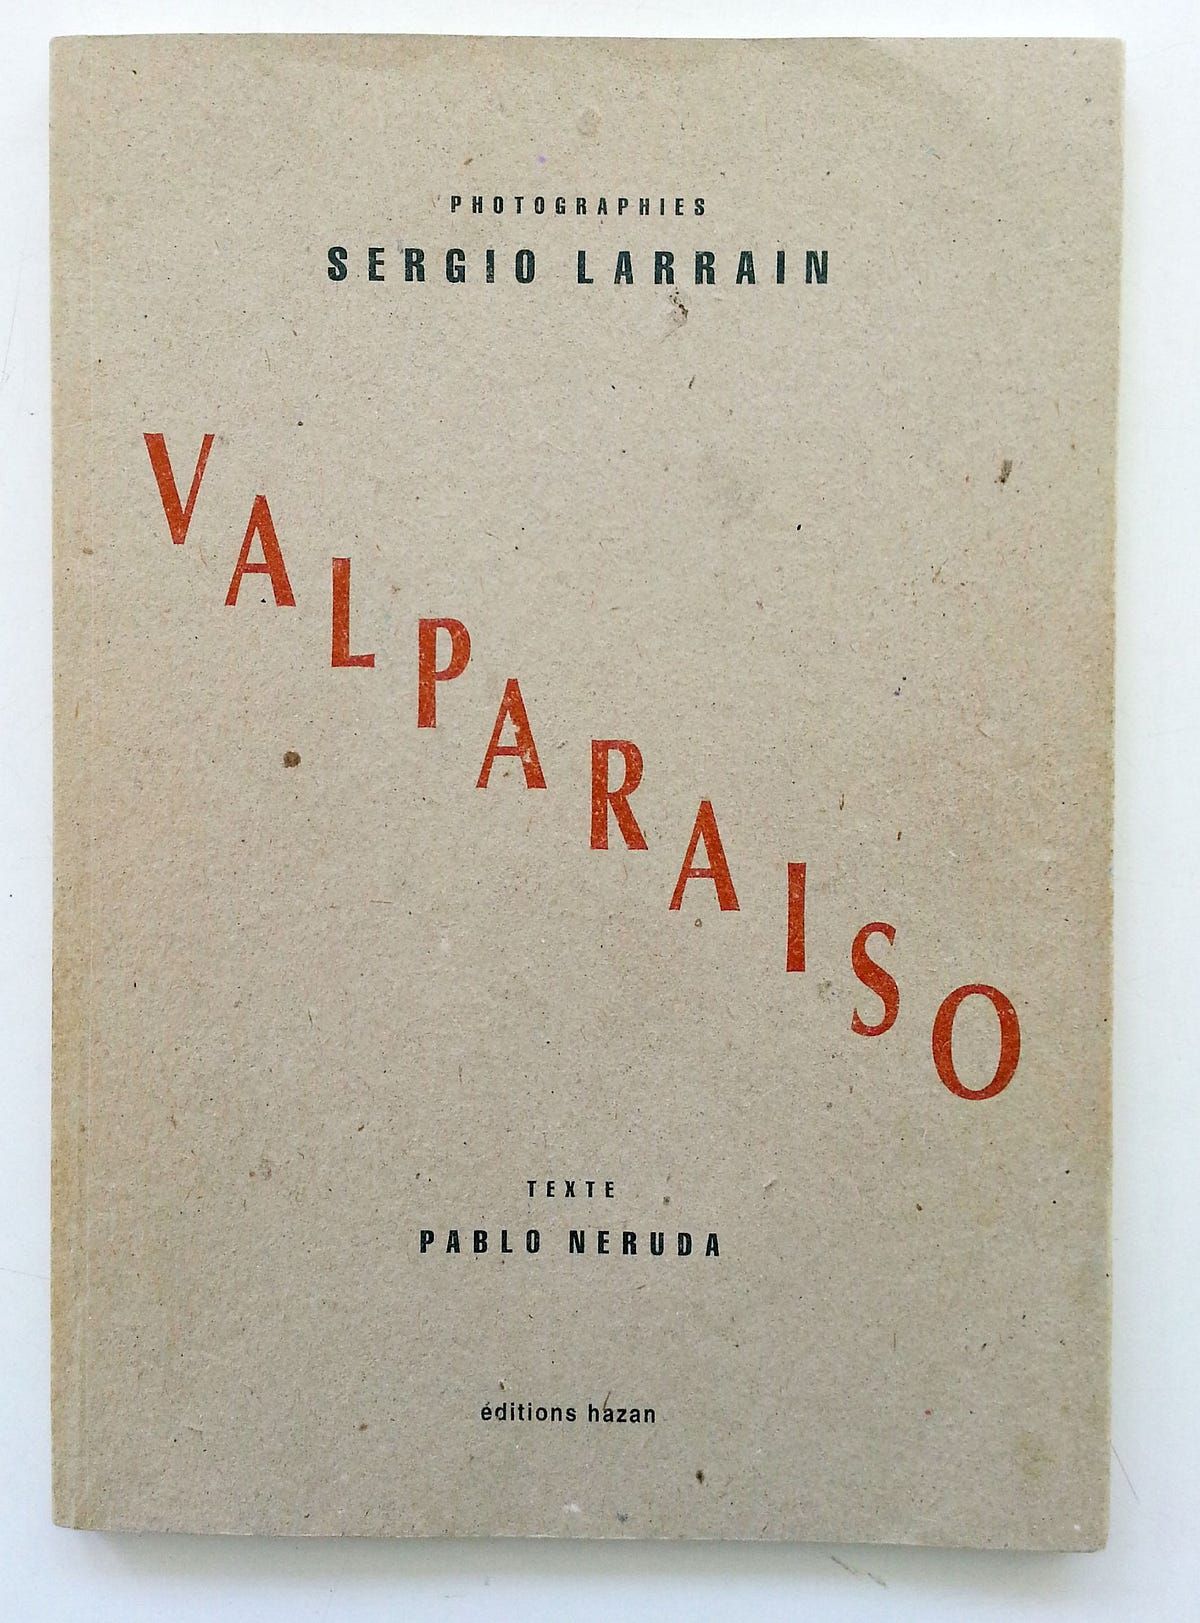 Sergio Larraín – Valparaiso